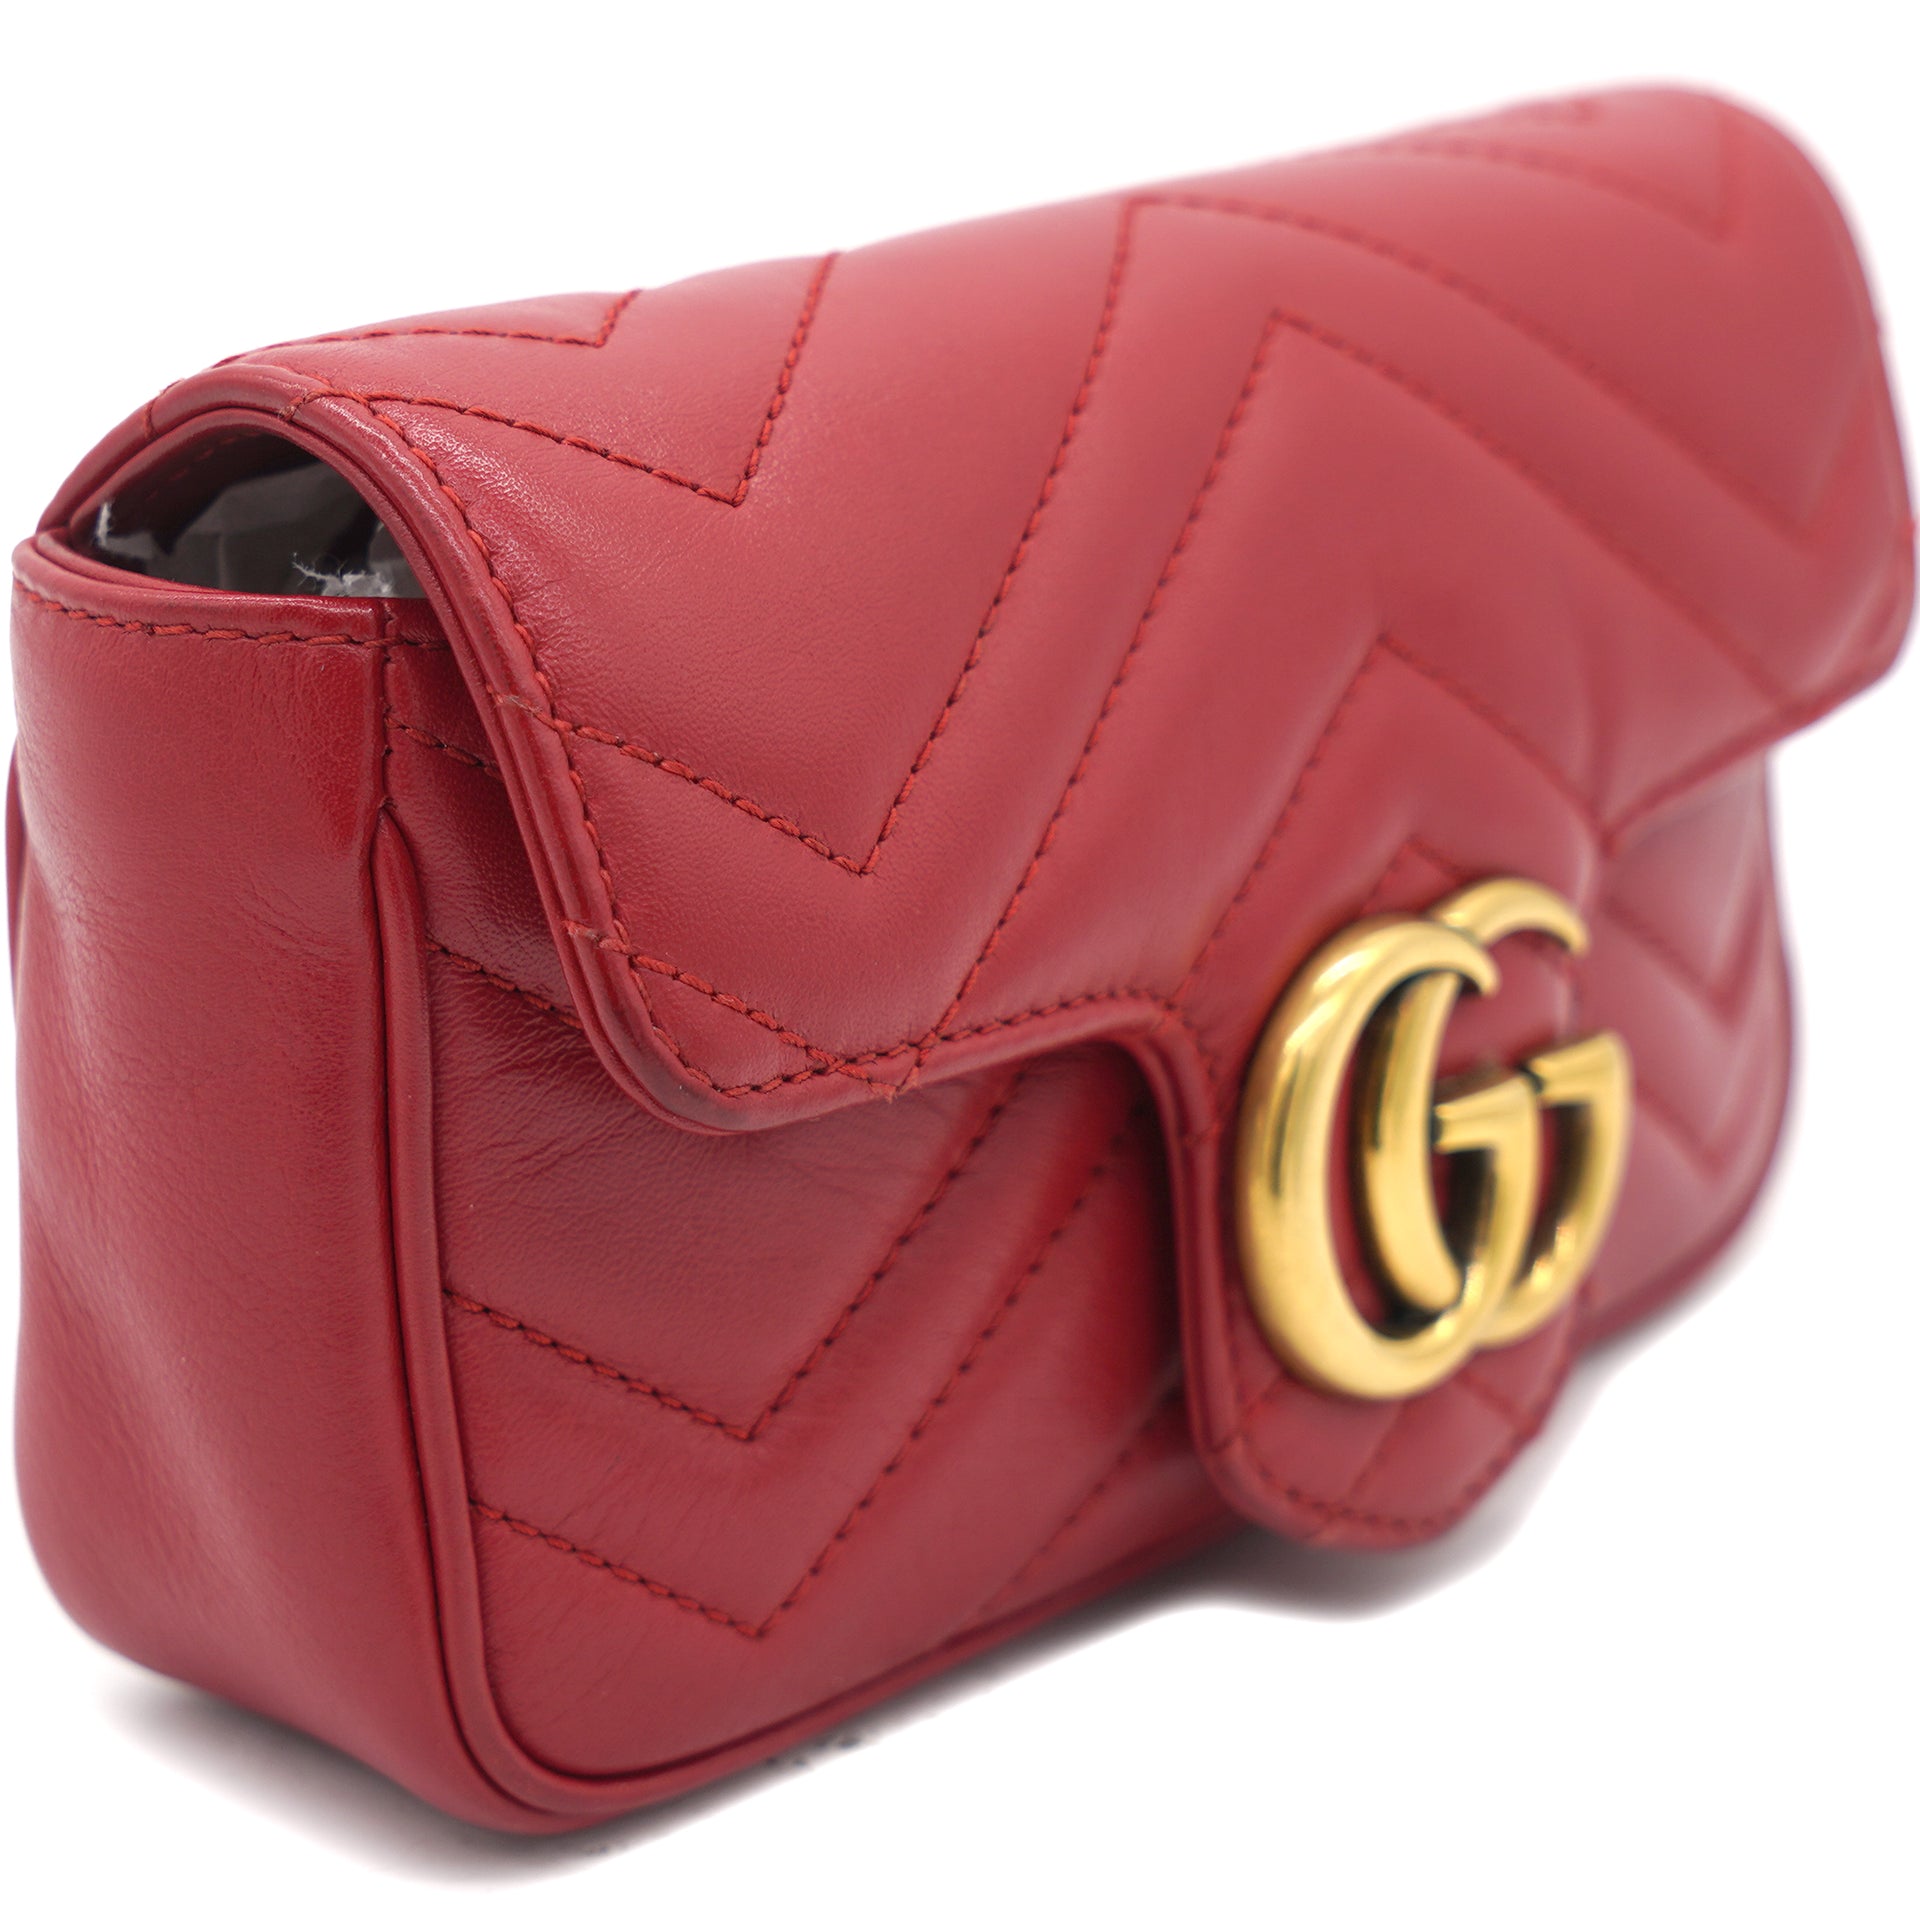 Gucci Marmont Bag 